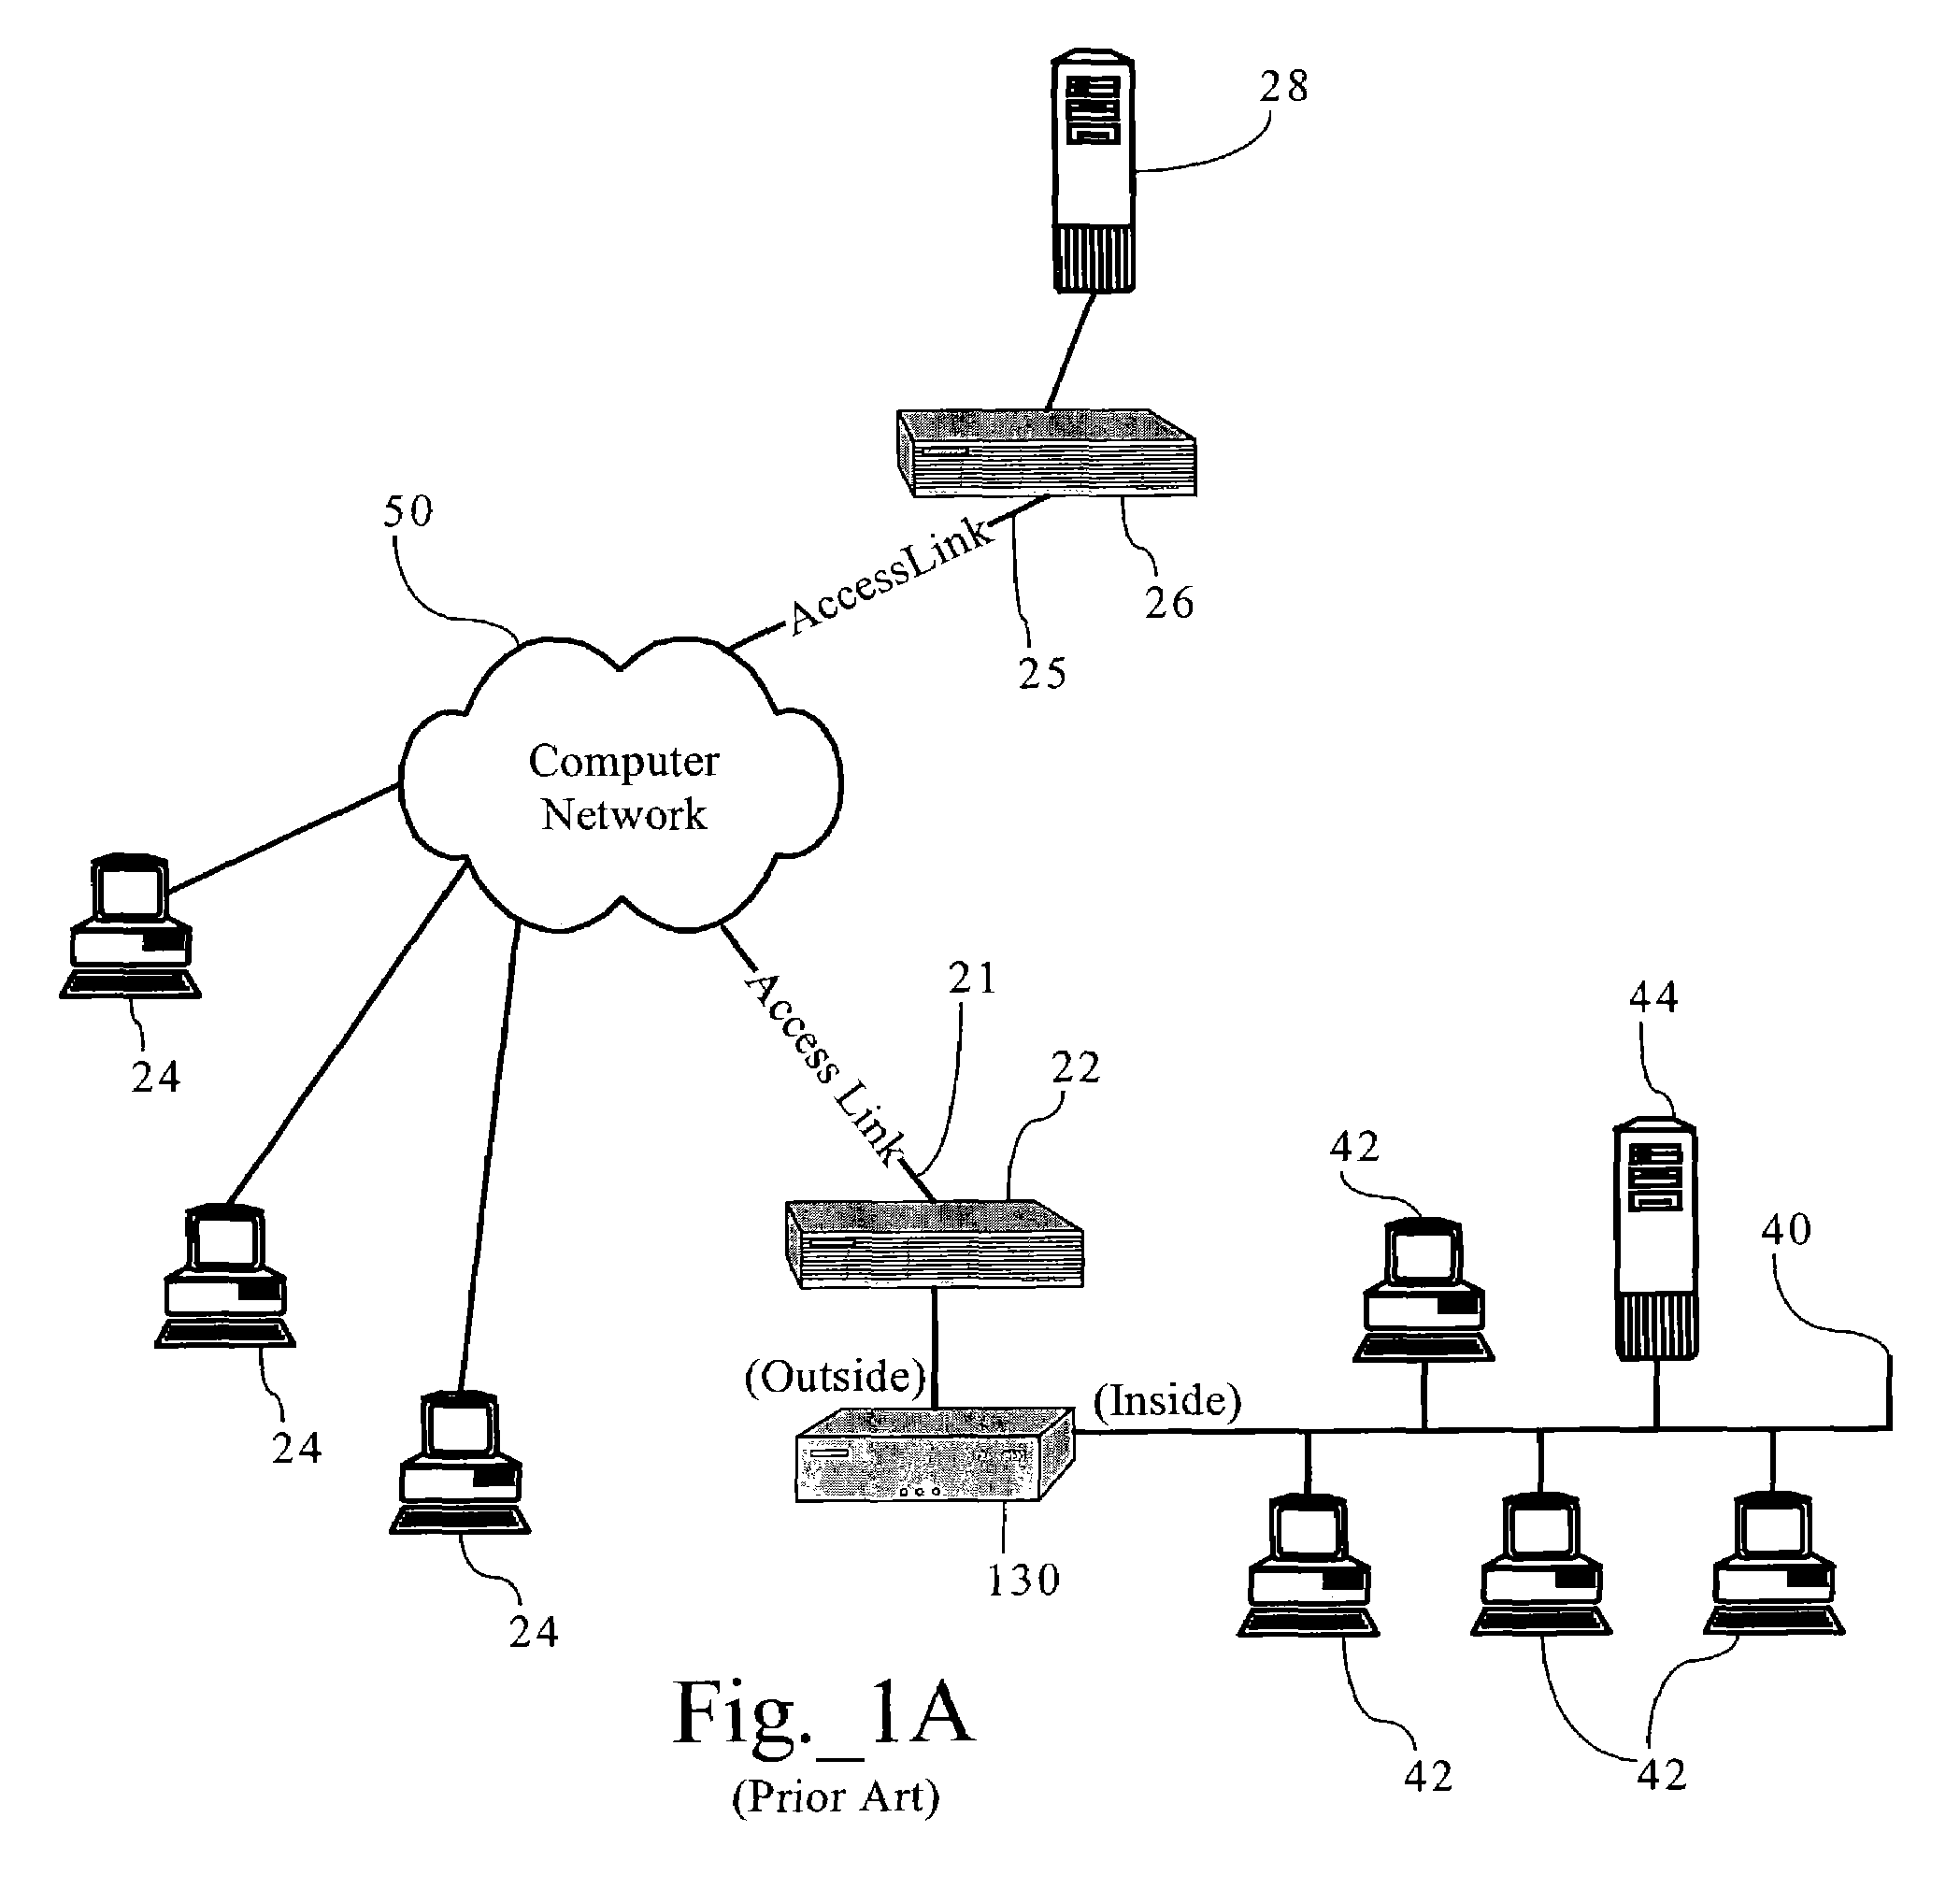 Network traffic synchronization mechanism